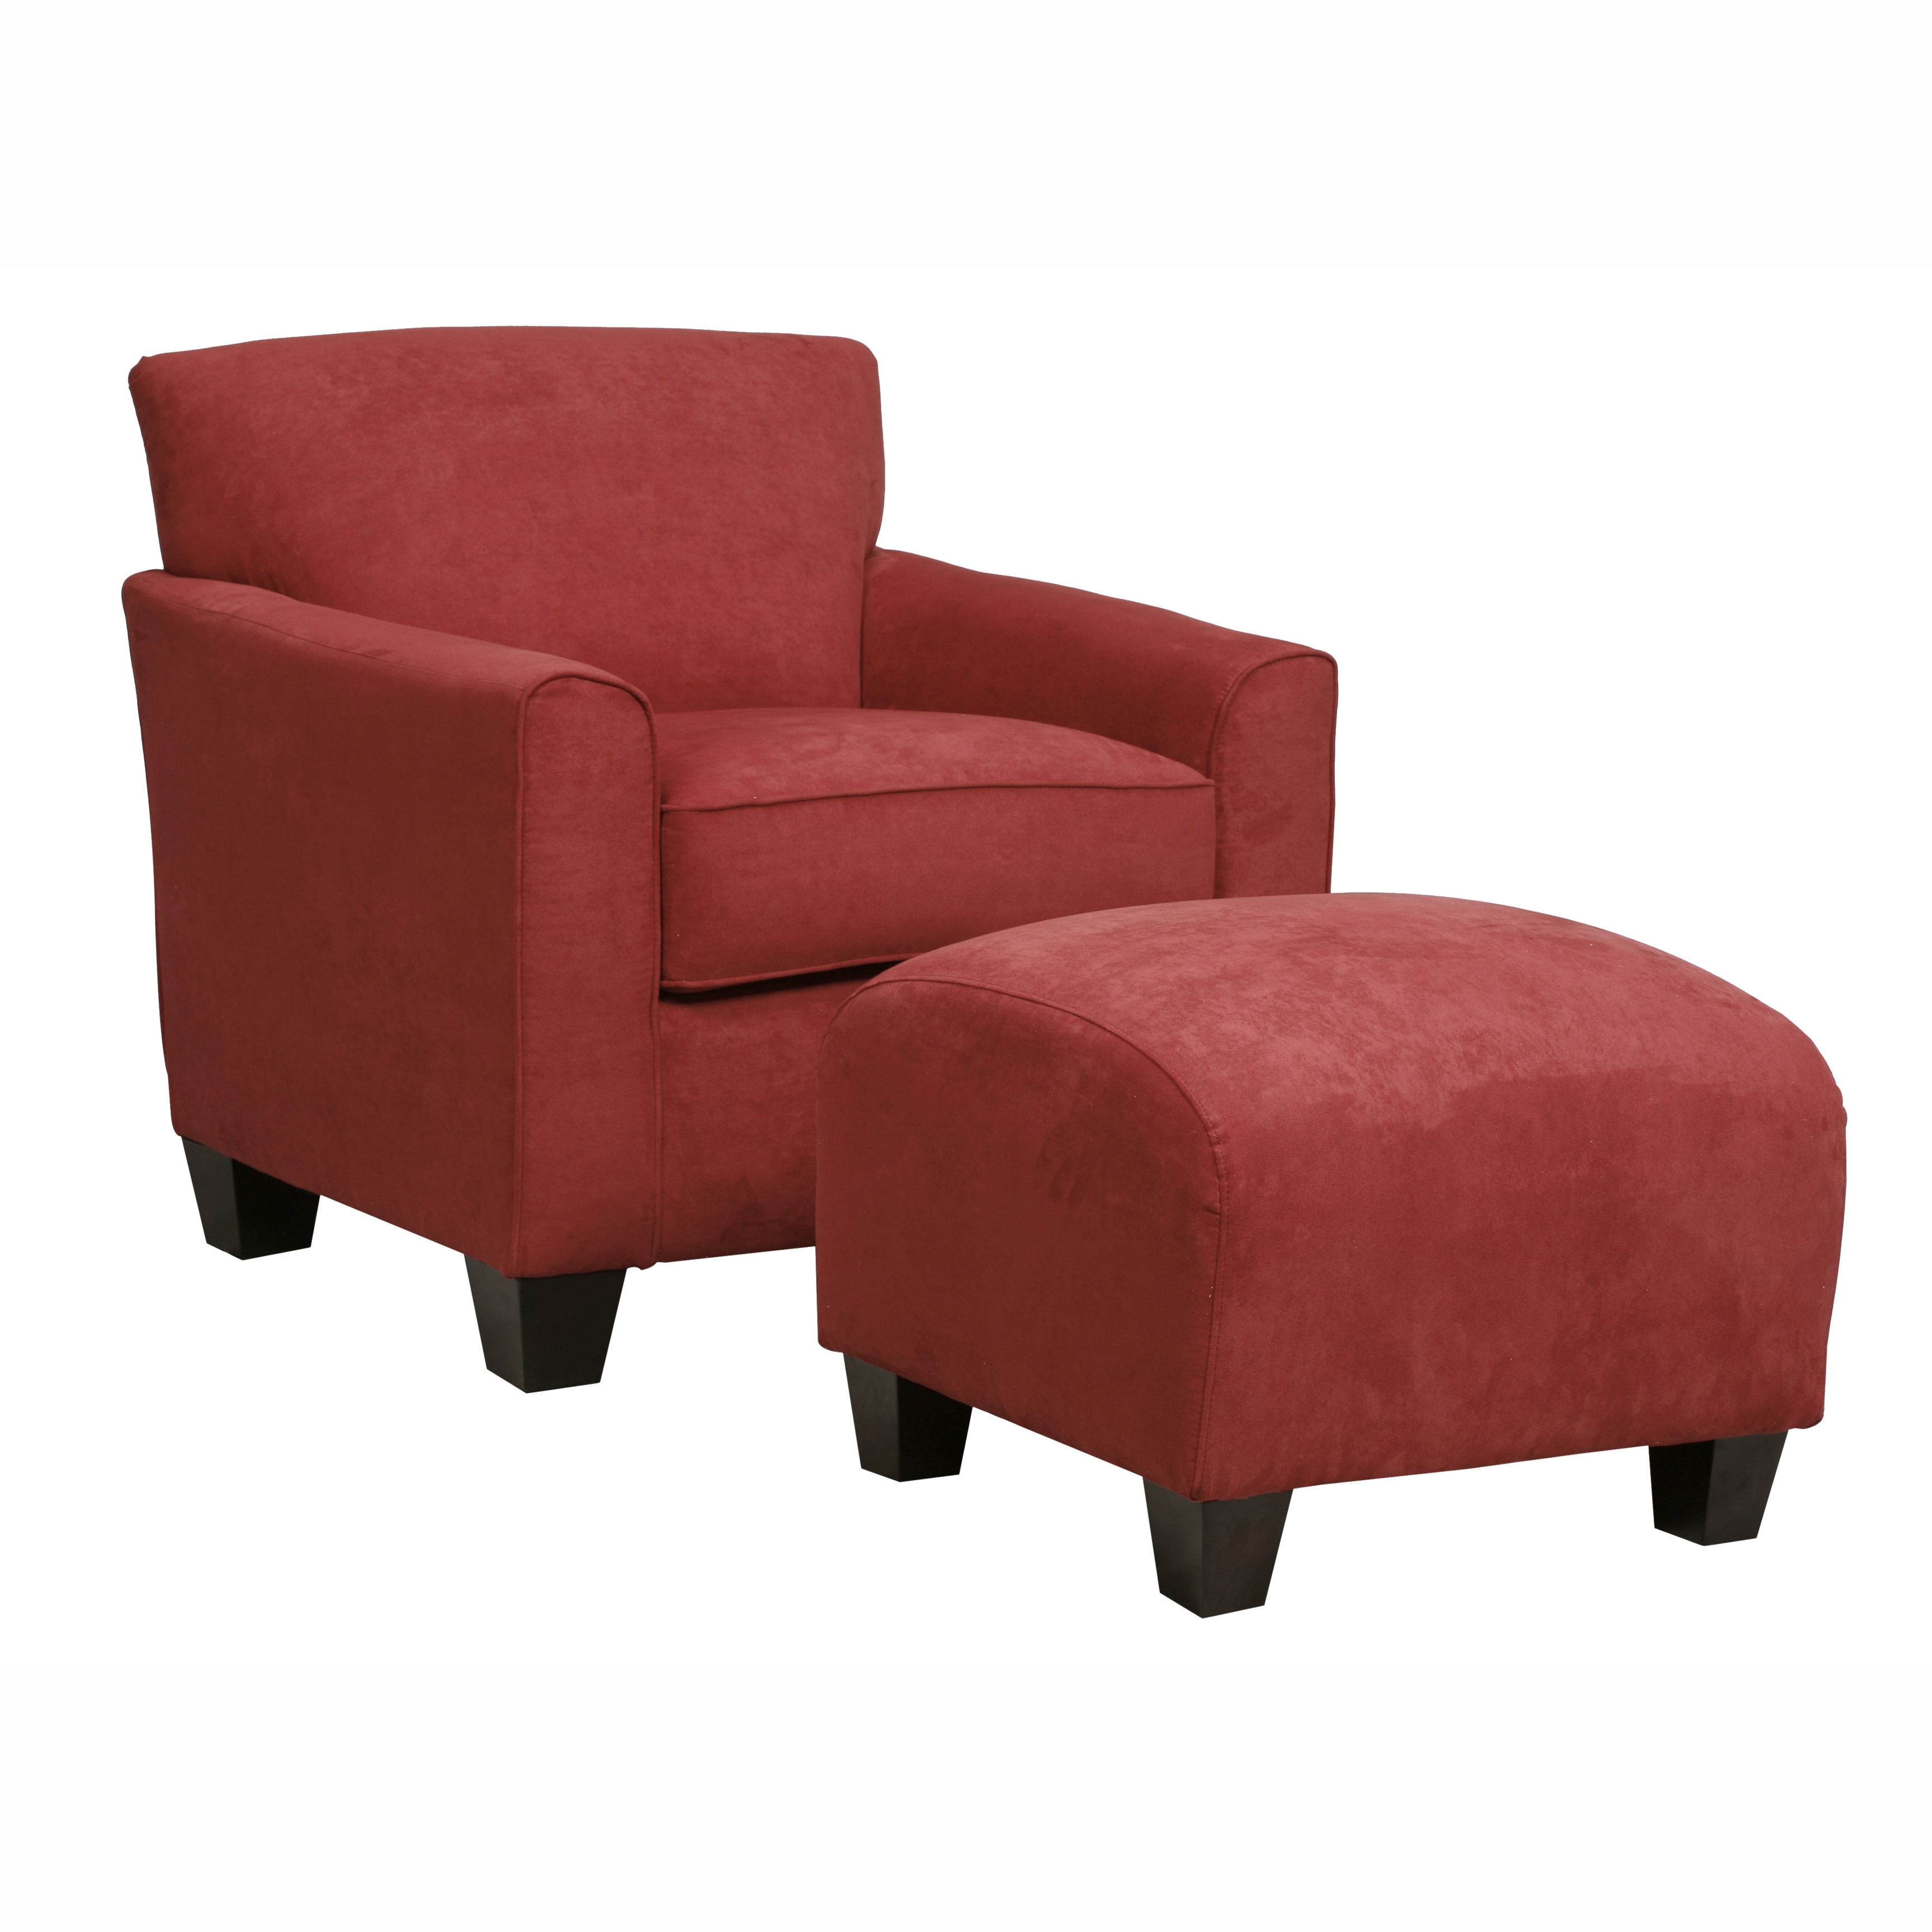 Portfolio Park Avenue Crimson Red Hand tied Chair And Ottoman